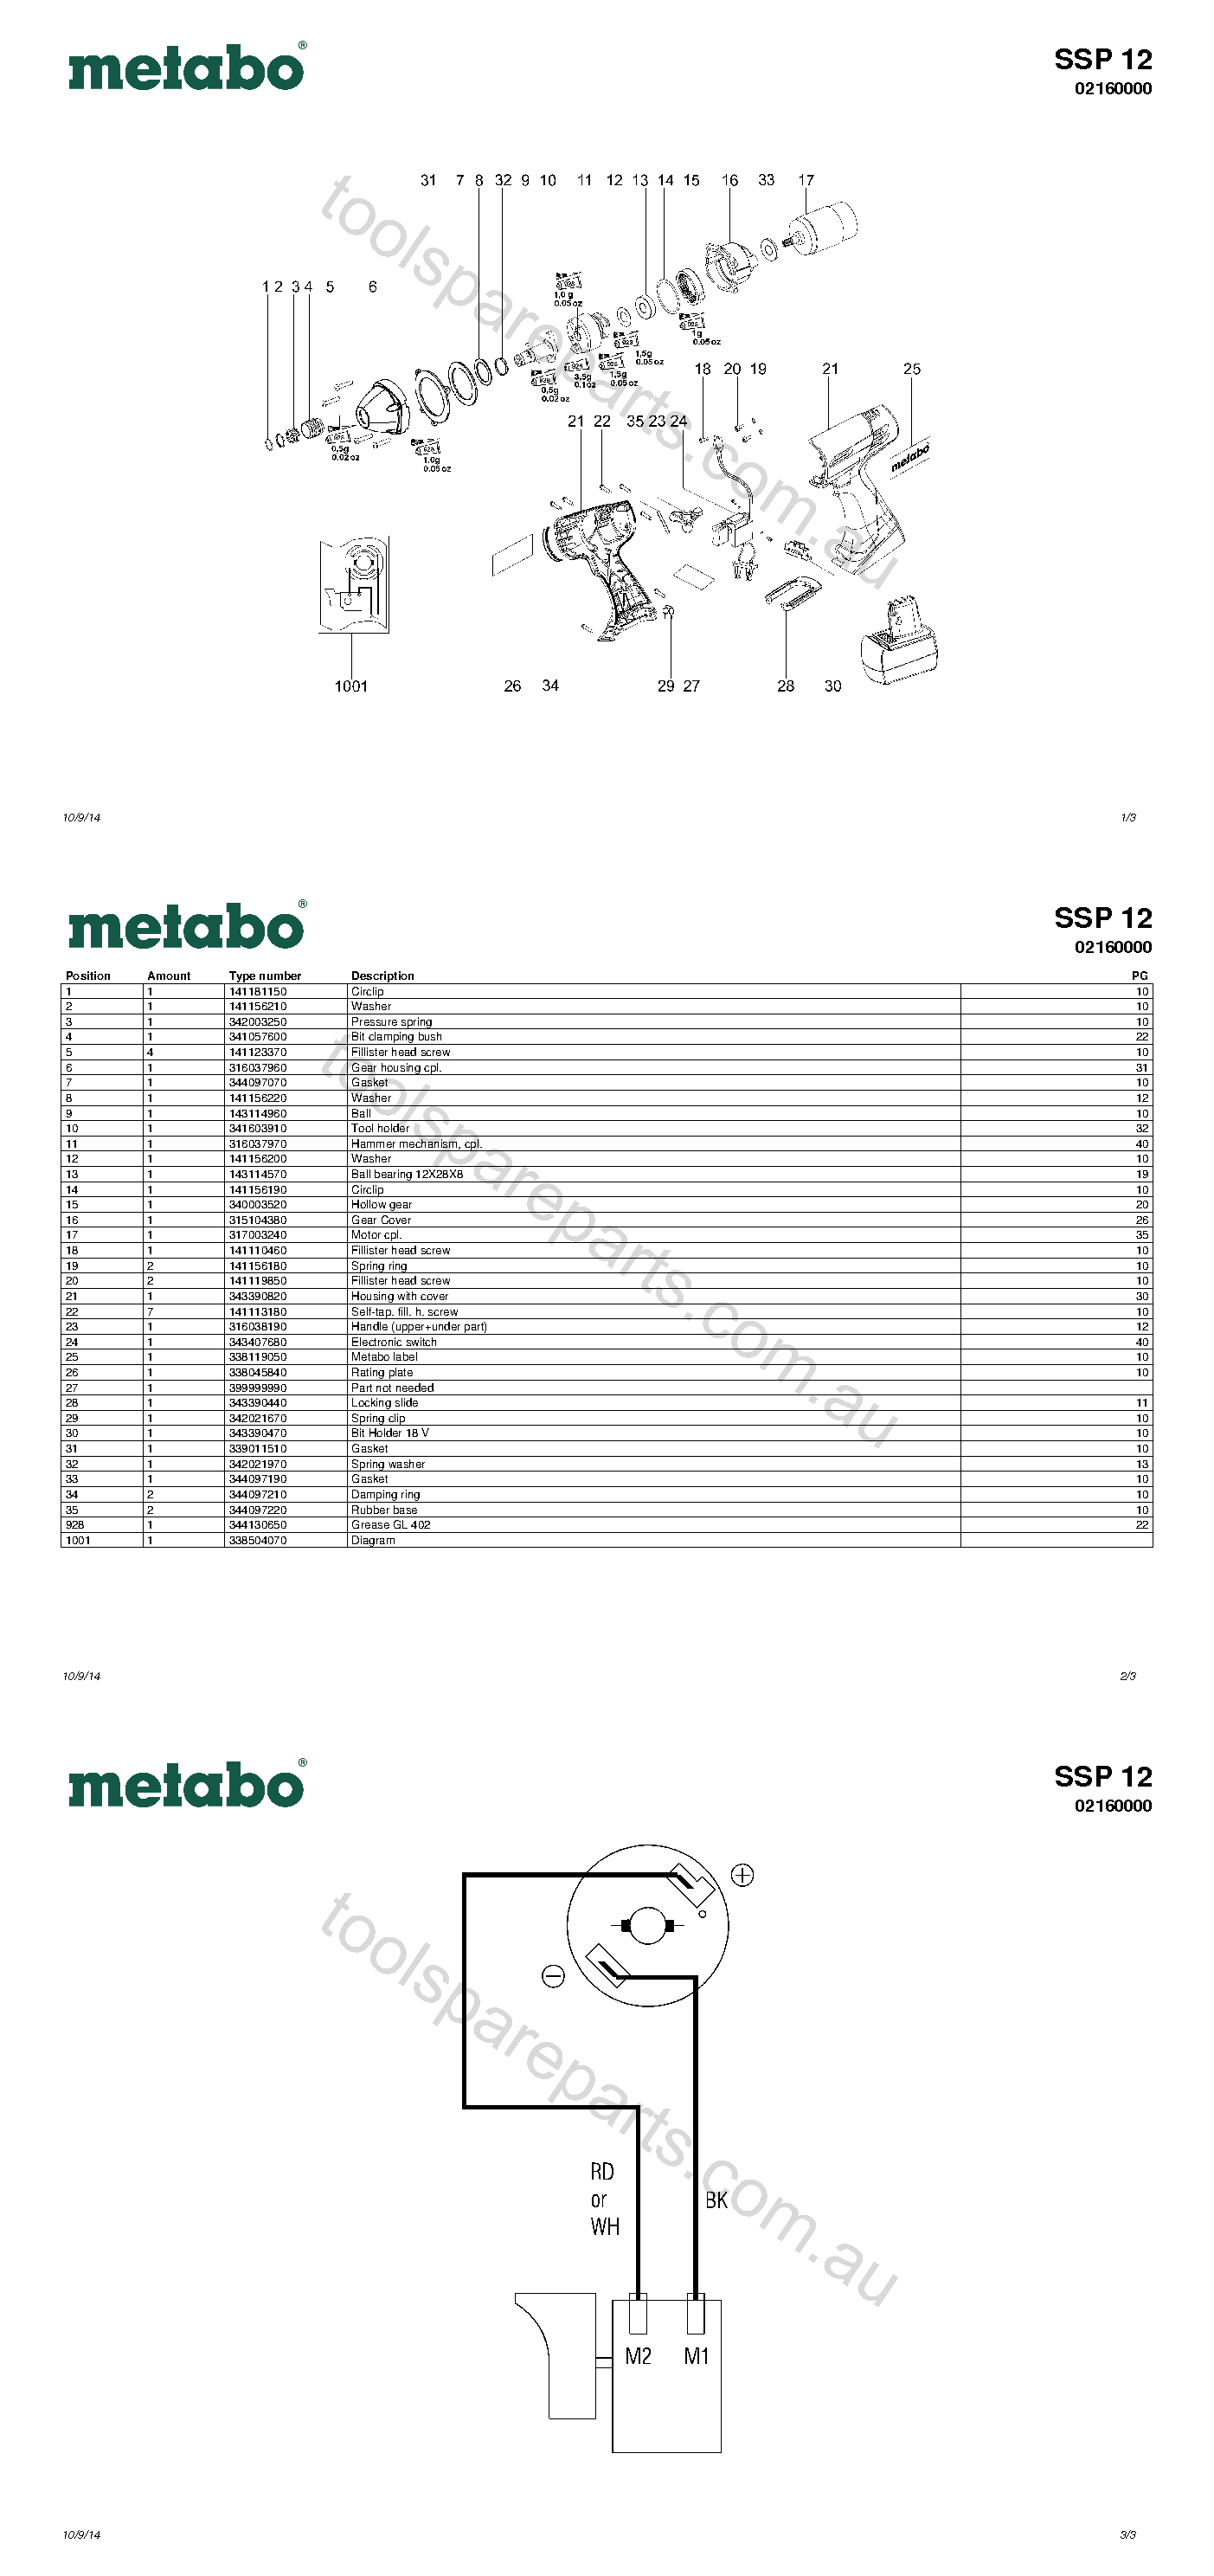 Metabo SSP 12 02160000  Diagram 1